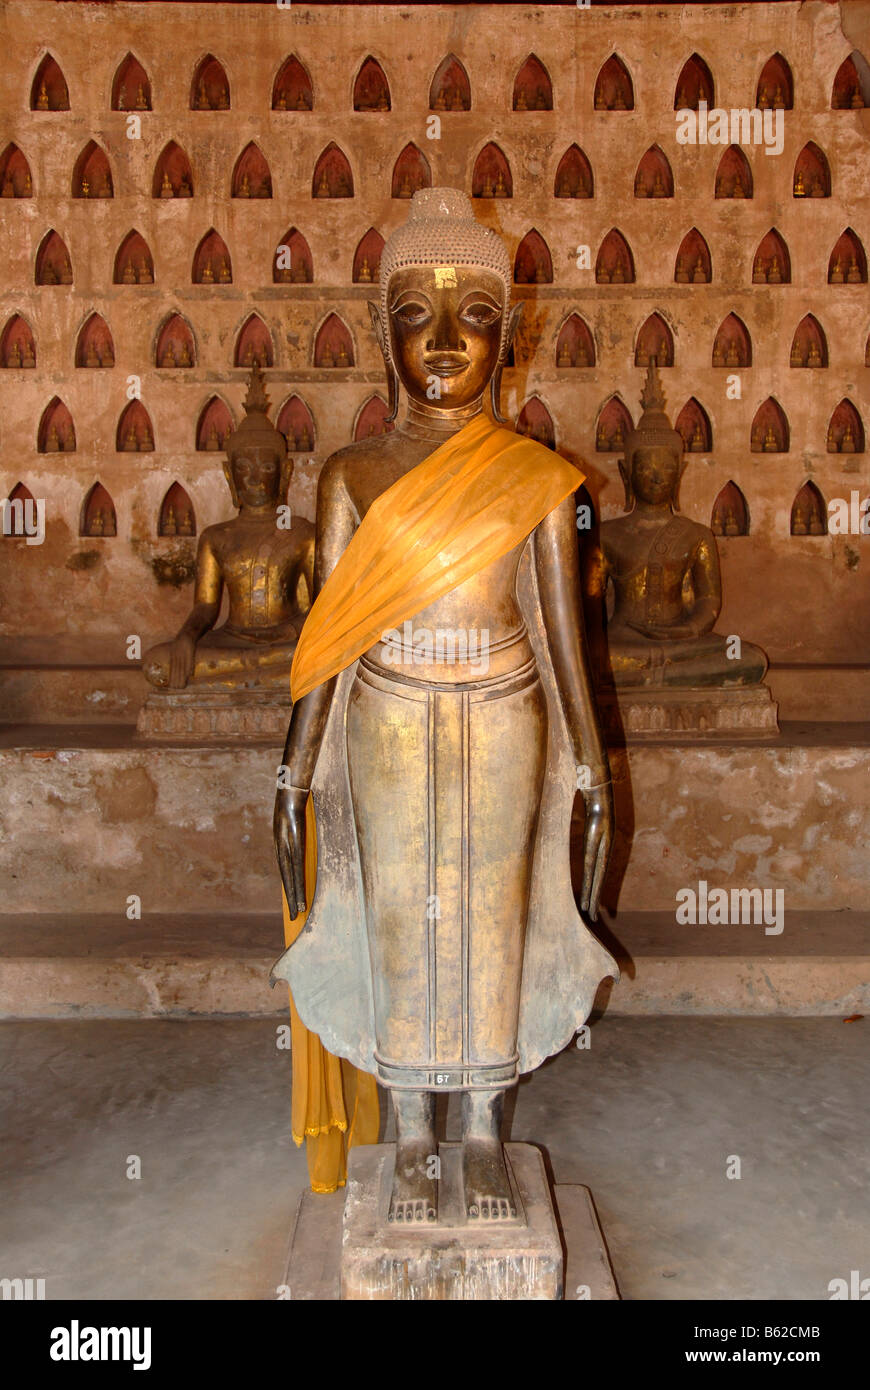 Typically Laotian standing bronze Buddha statue, Wat Sisaket, Vientiane, Laos, South East Asia Stock Photo